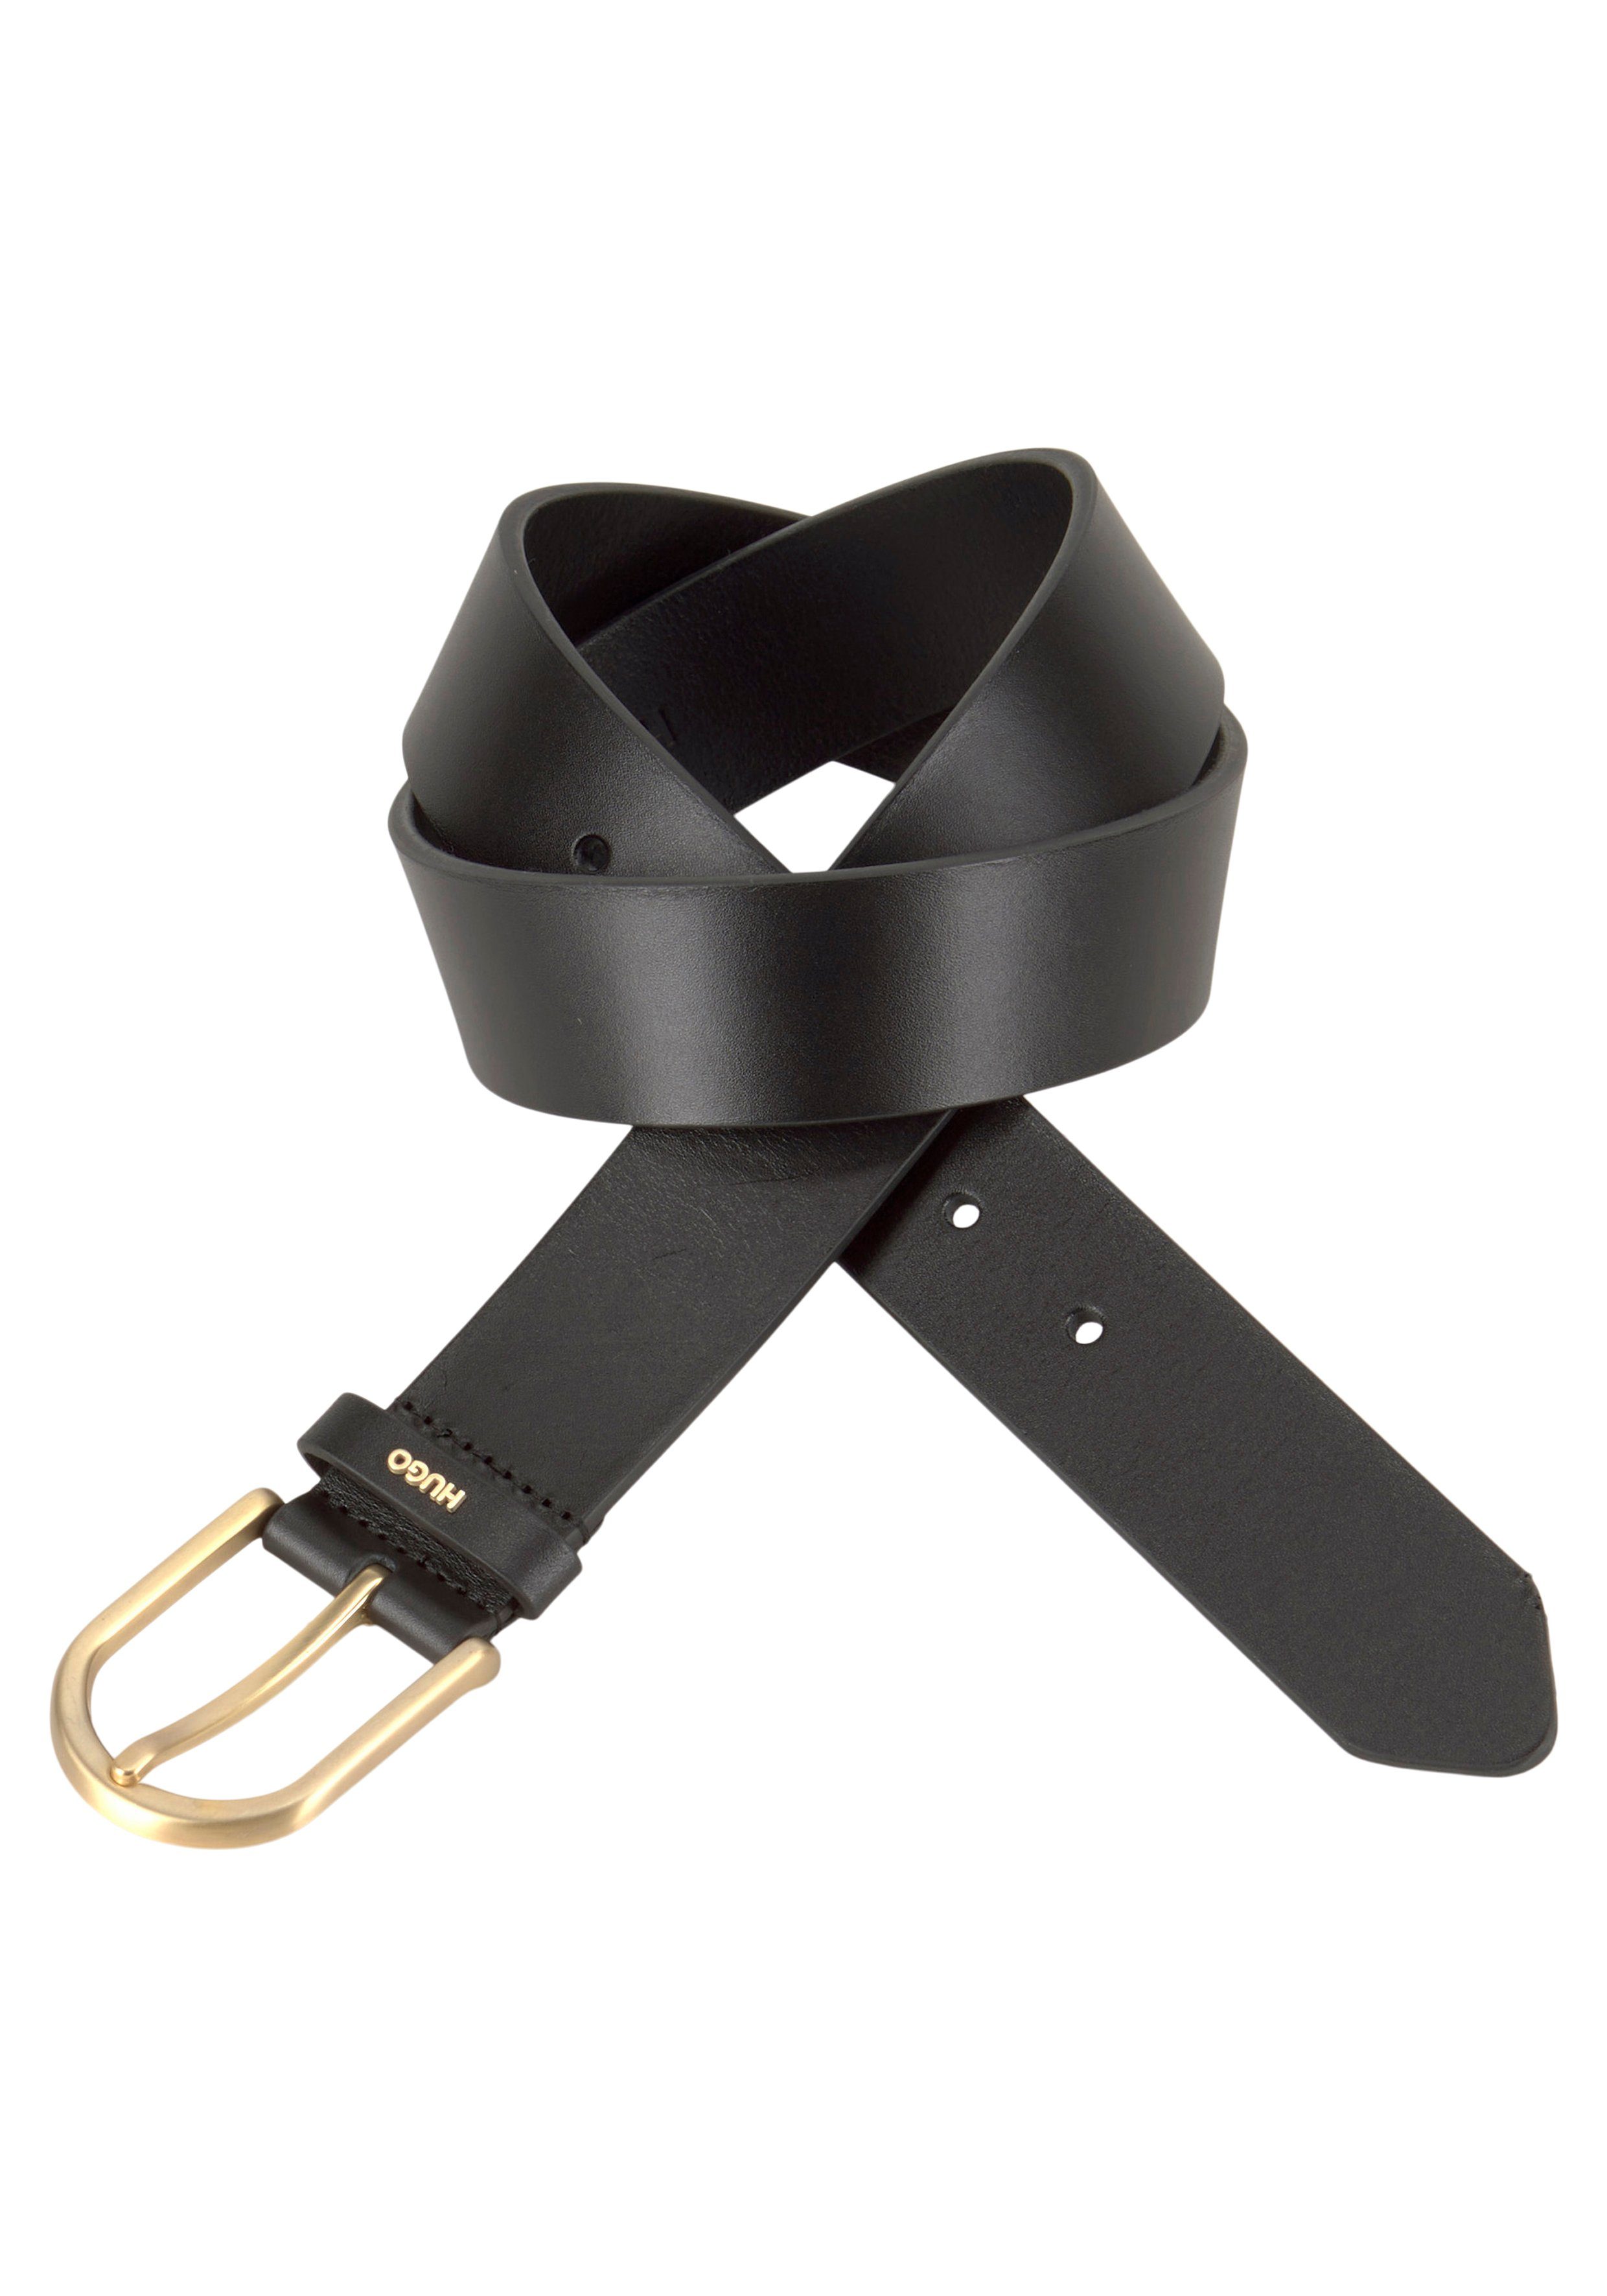 Black HUGO Verschluss Ledergürtel Belt 35cm kontrastfarbener Zoey Boss-Prägung mit am